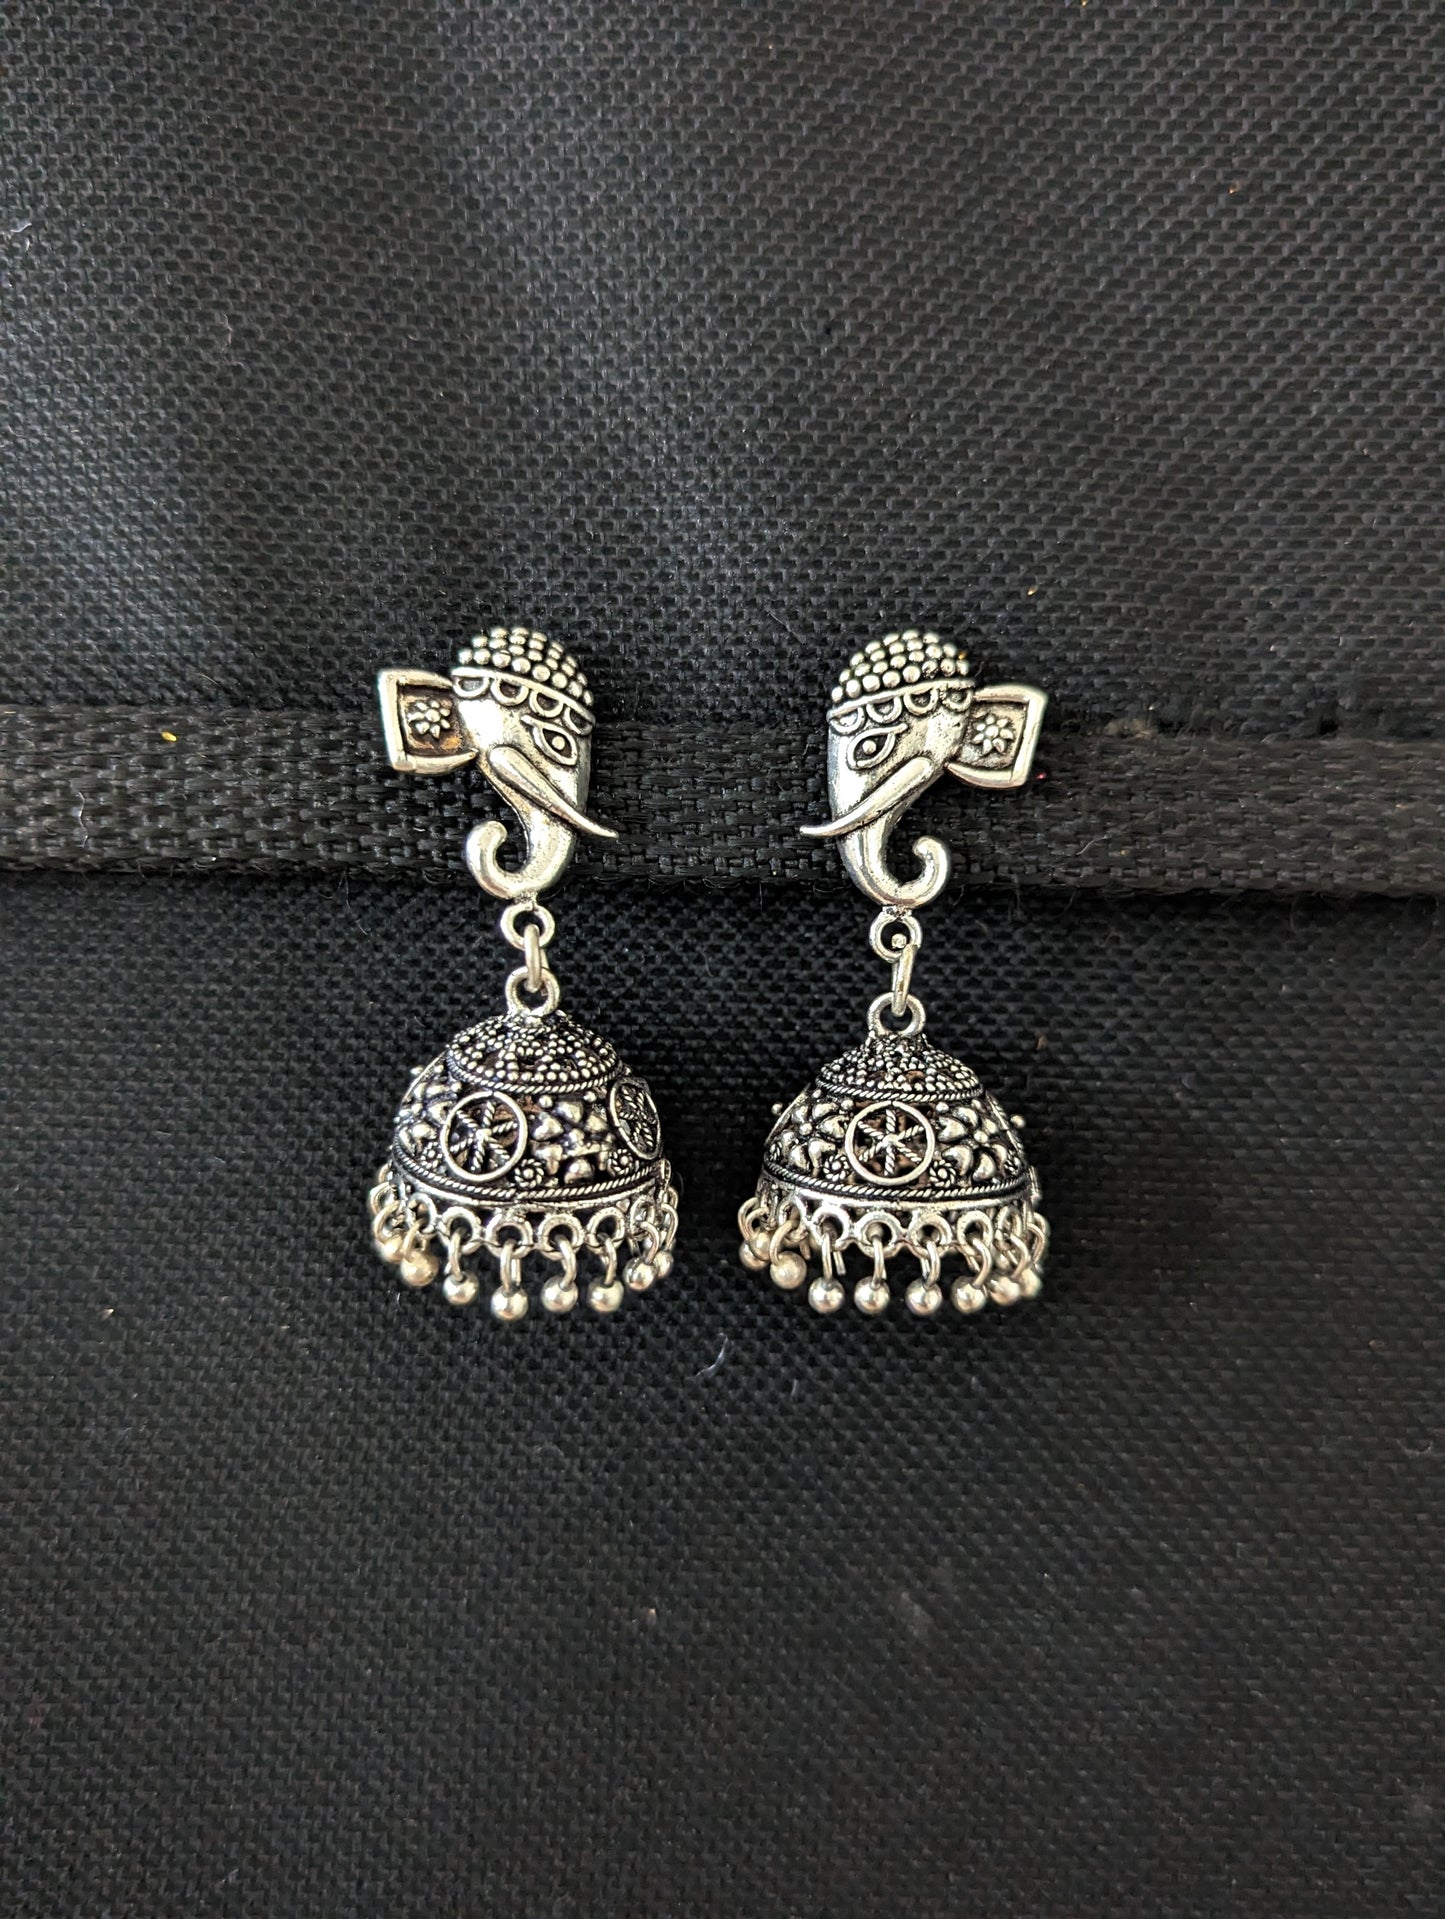 Oxidized silver jhumka earrings - Elephant designs